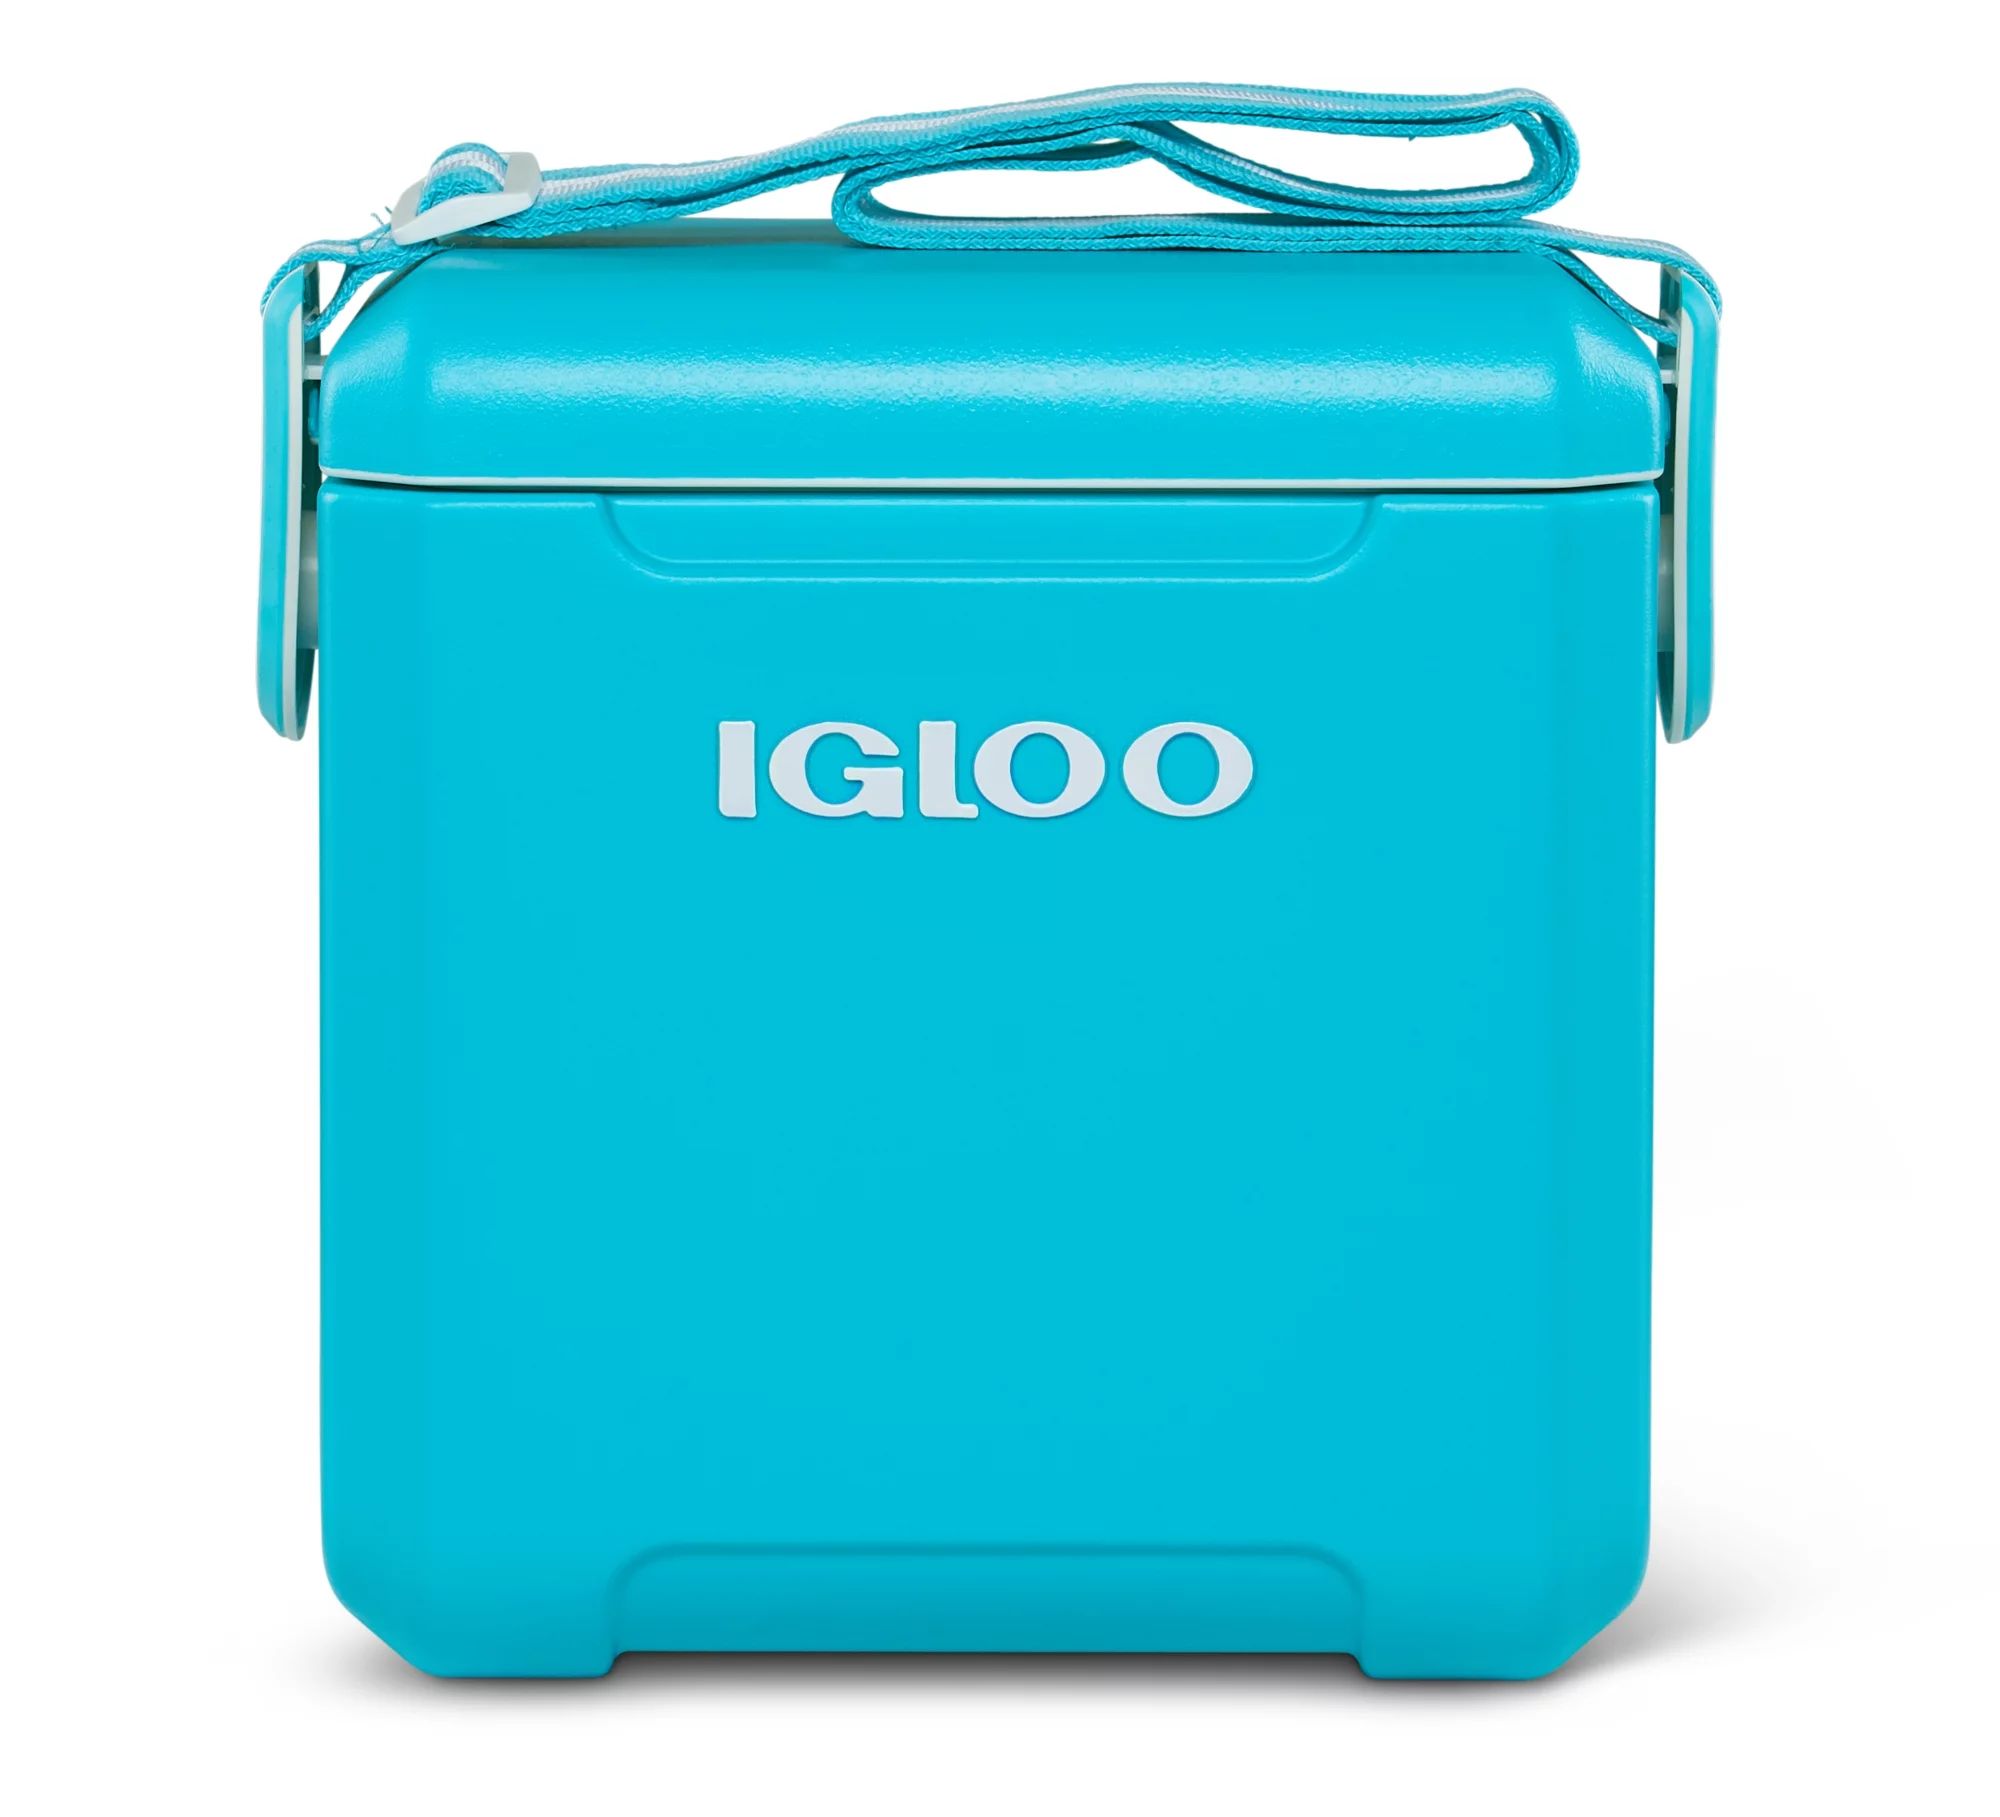 Igloo 11 QT. Tag Along Too Hard Side Cooler, Turquoise Blue | Walmart (US)